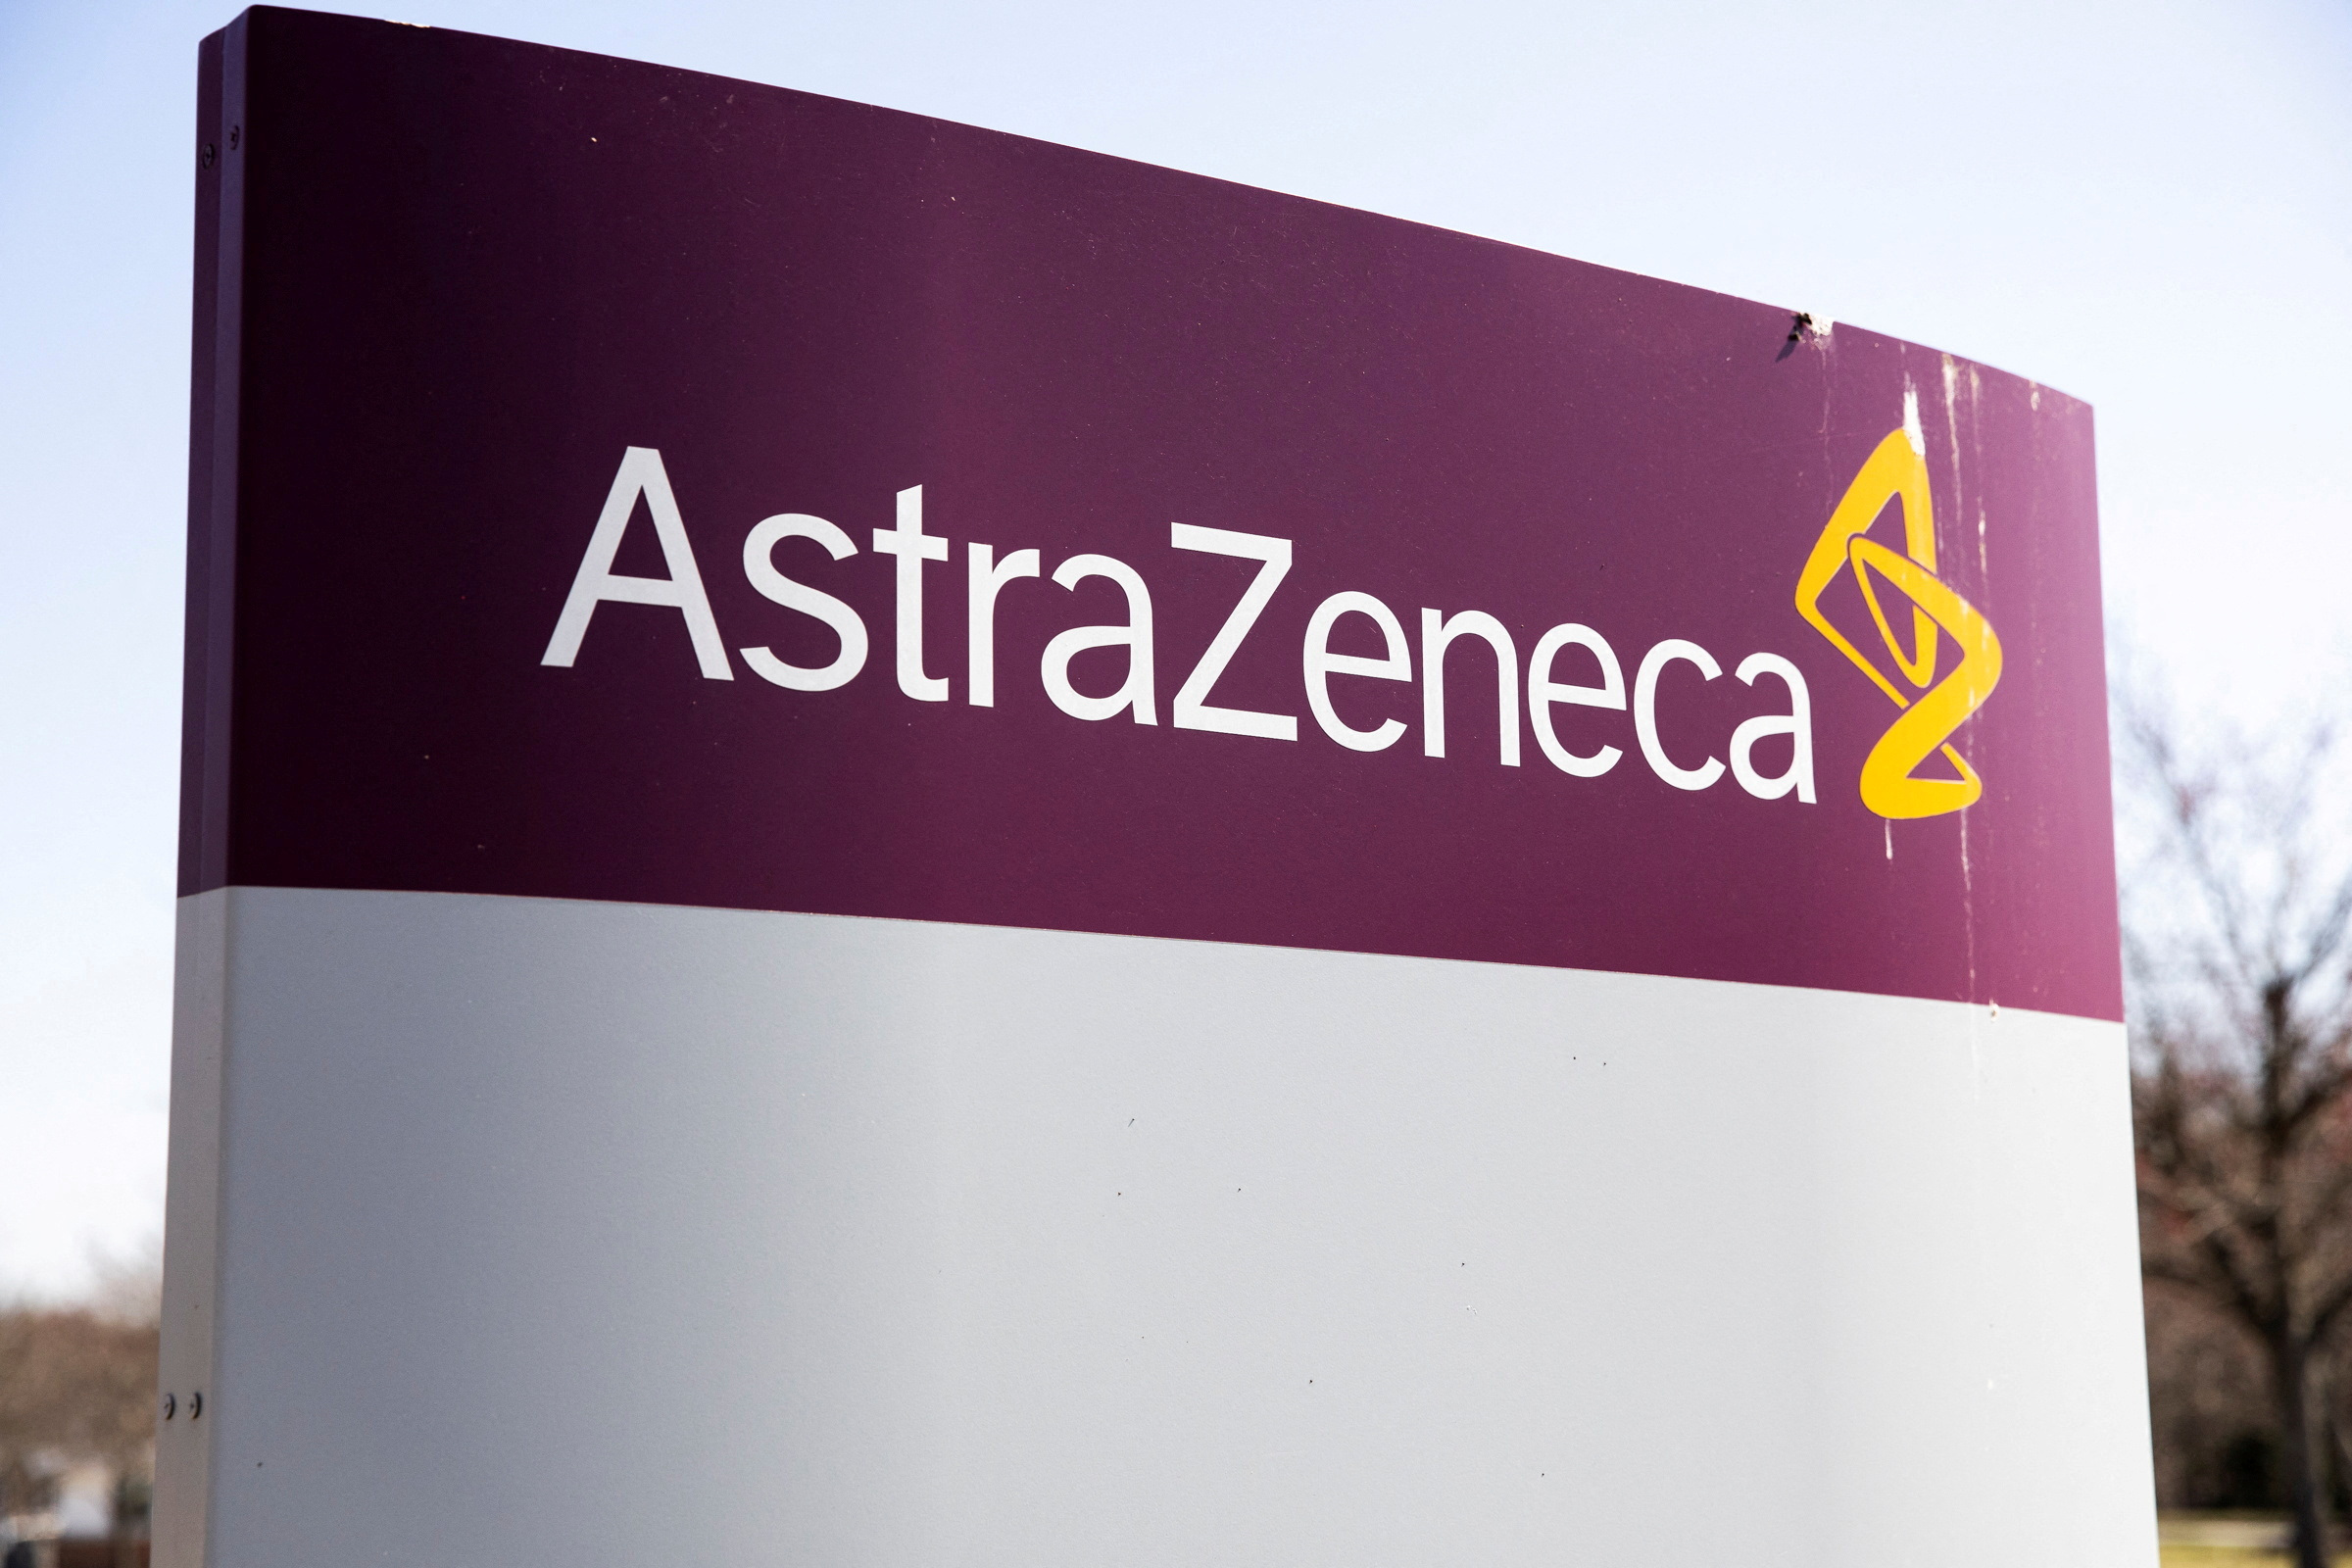  the North America headquarters of AstraZeneca